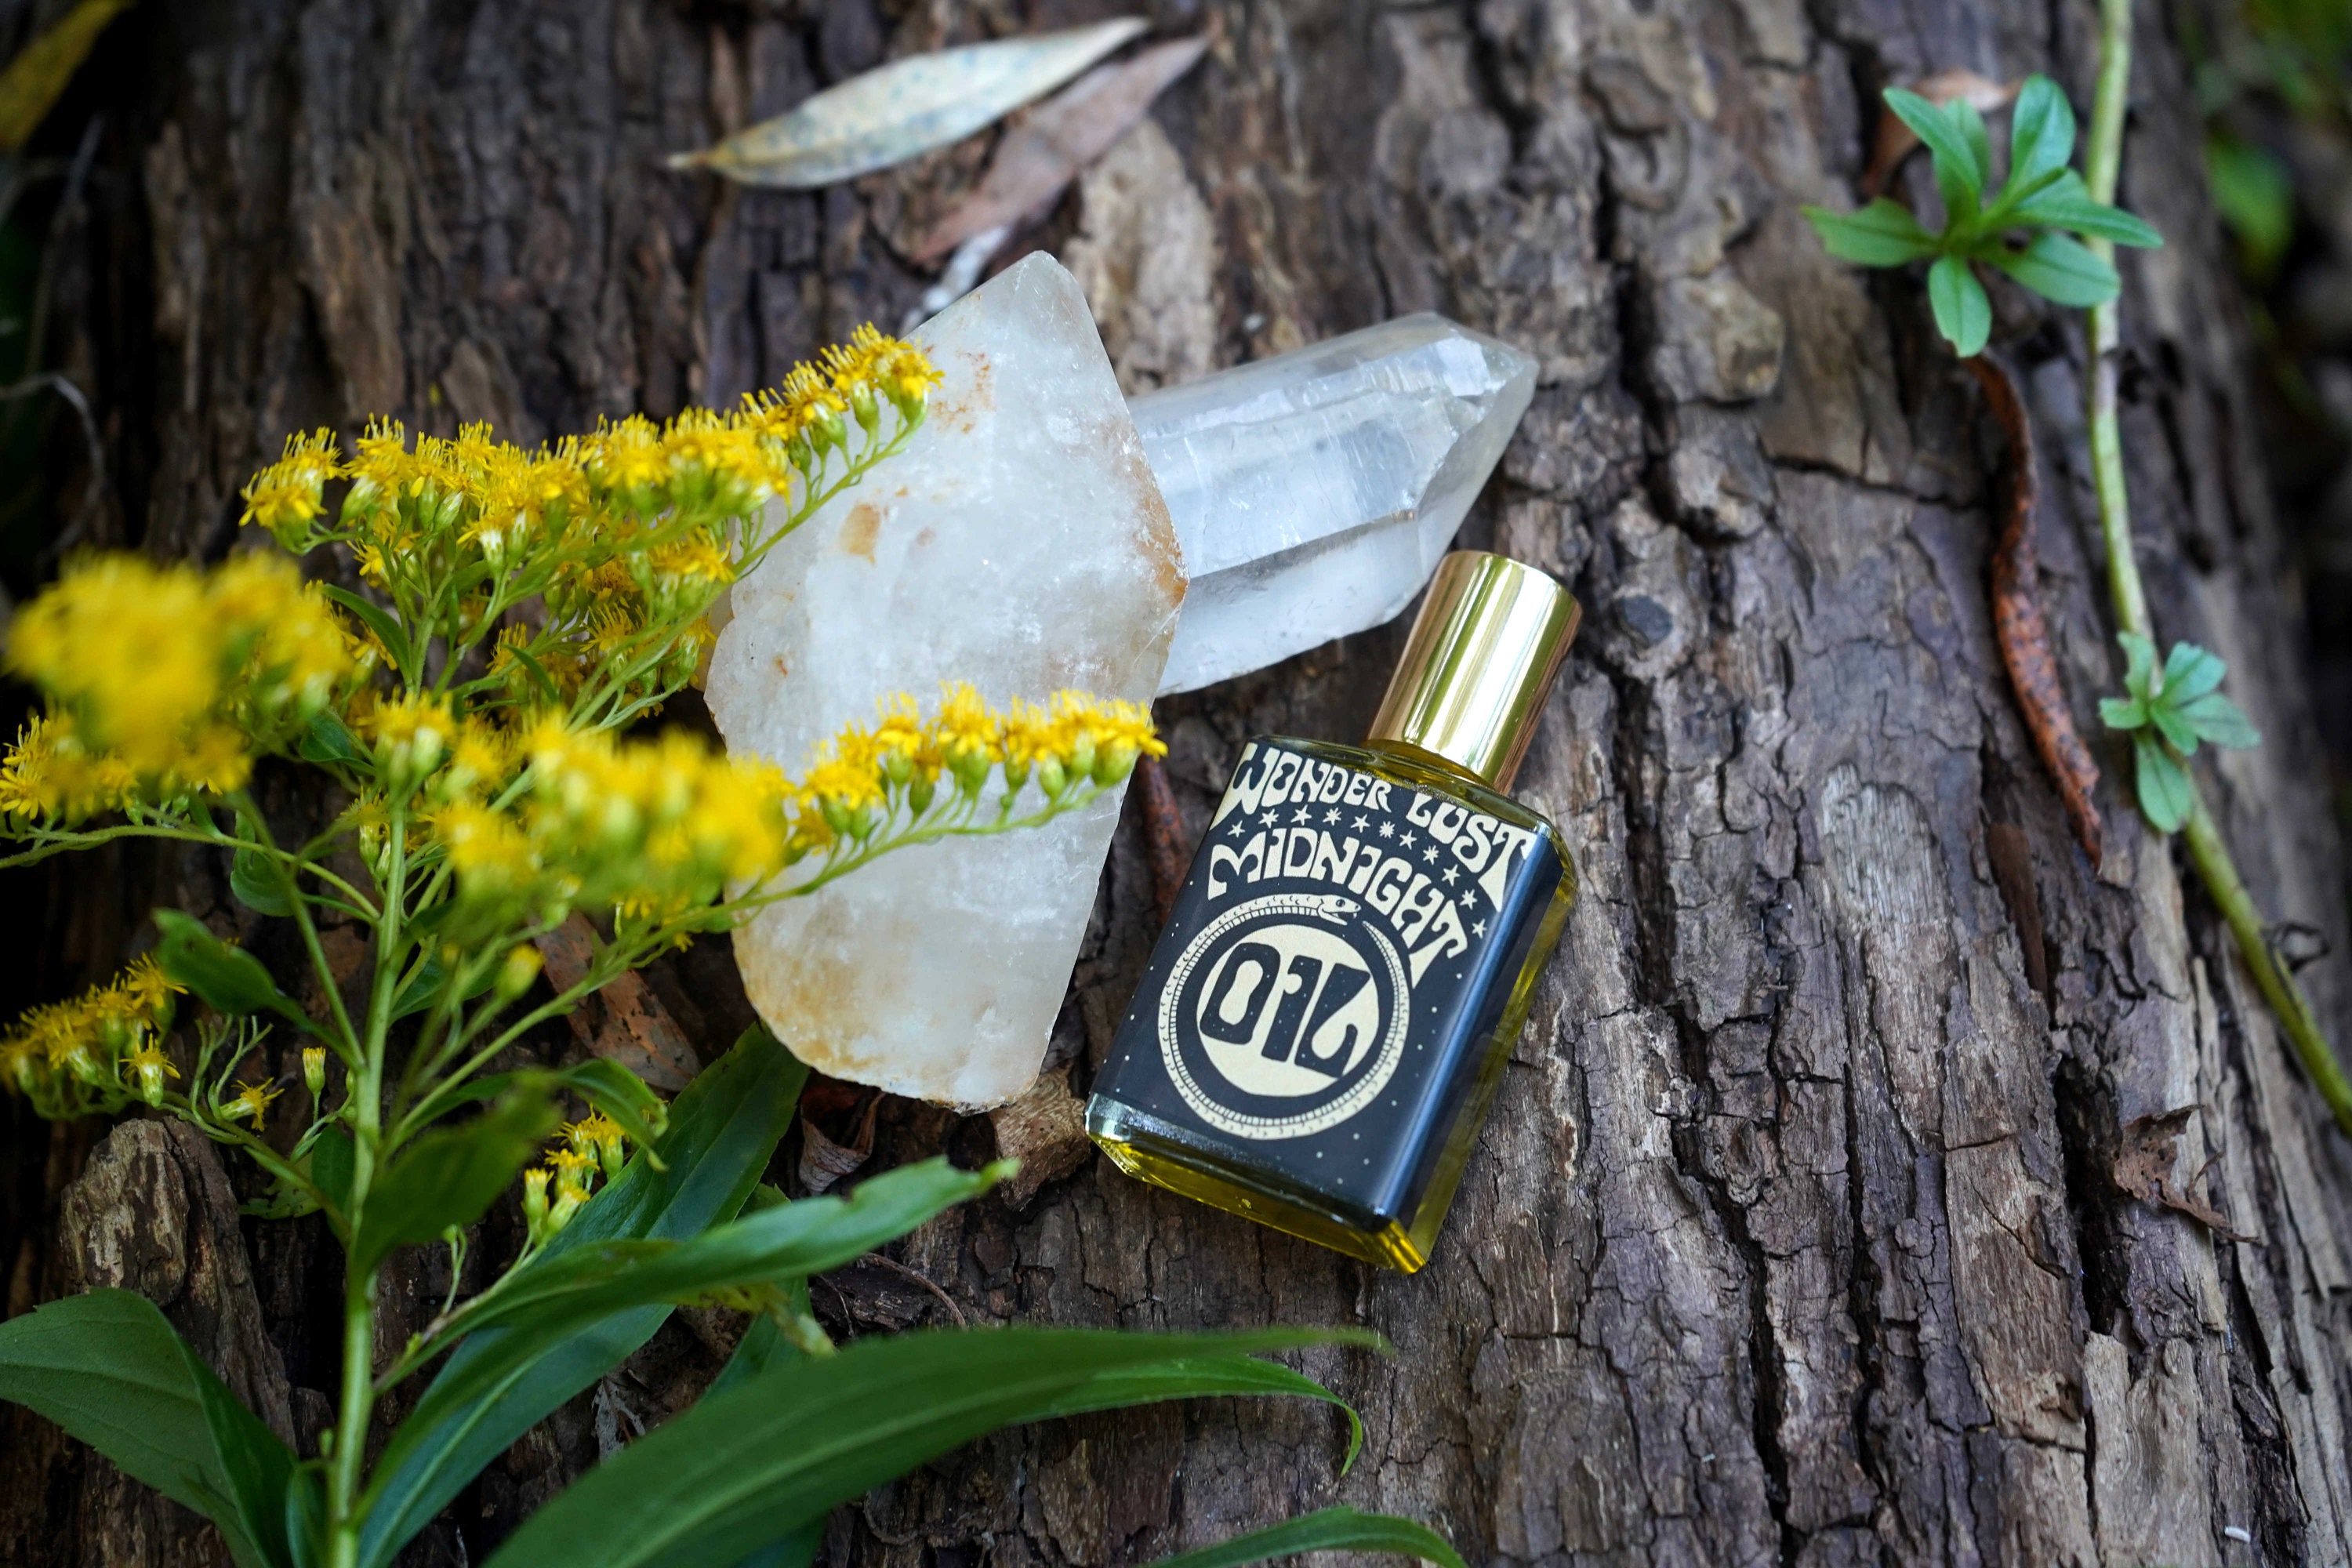 Unicorn Vanilla Essential Oils Perfume Natural Aromatherapy